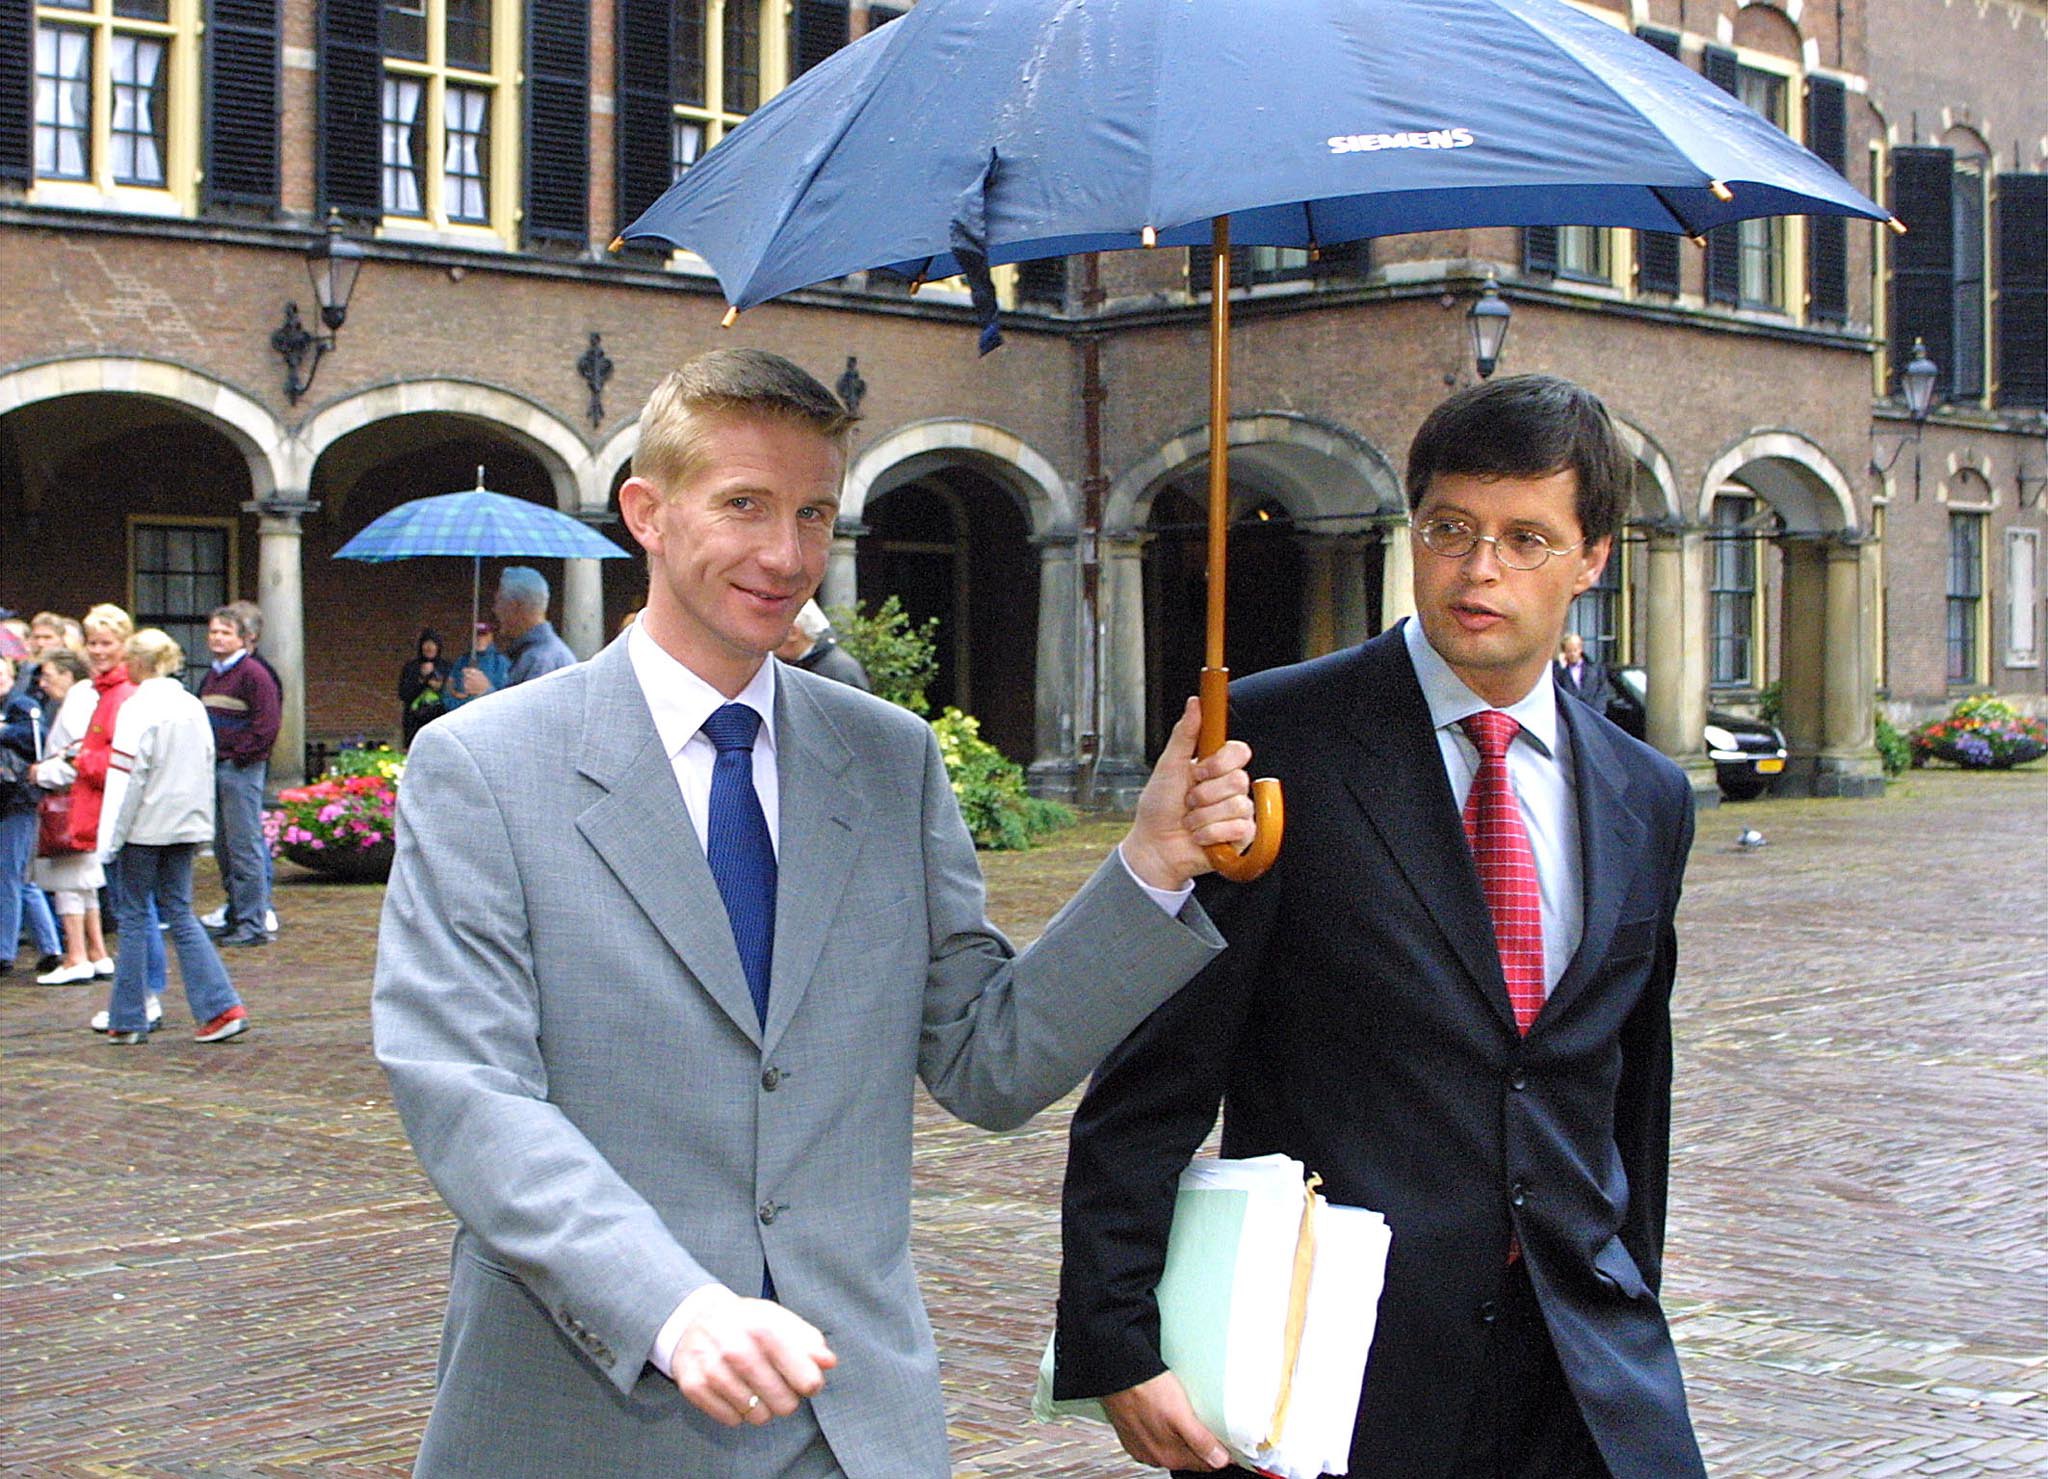 CDA'er Jack de Vries samen met toenmalig minister-president Jan-Peter Balkenende. Foto: Dirk Hol via ANP.